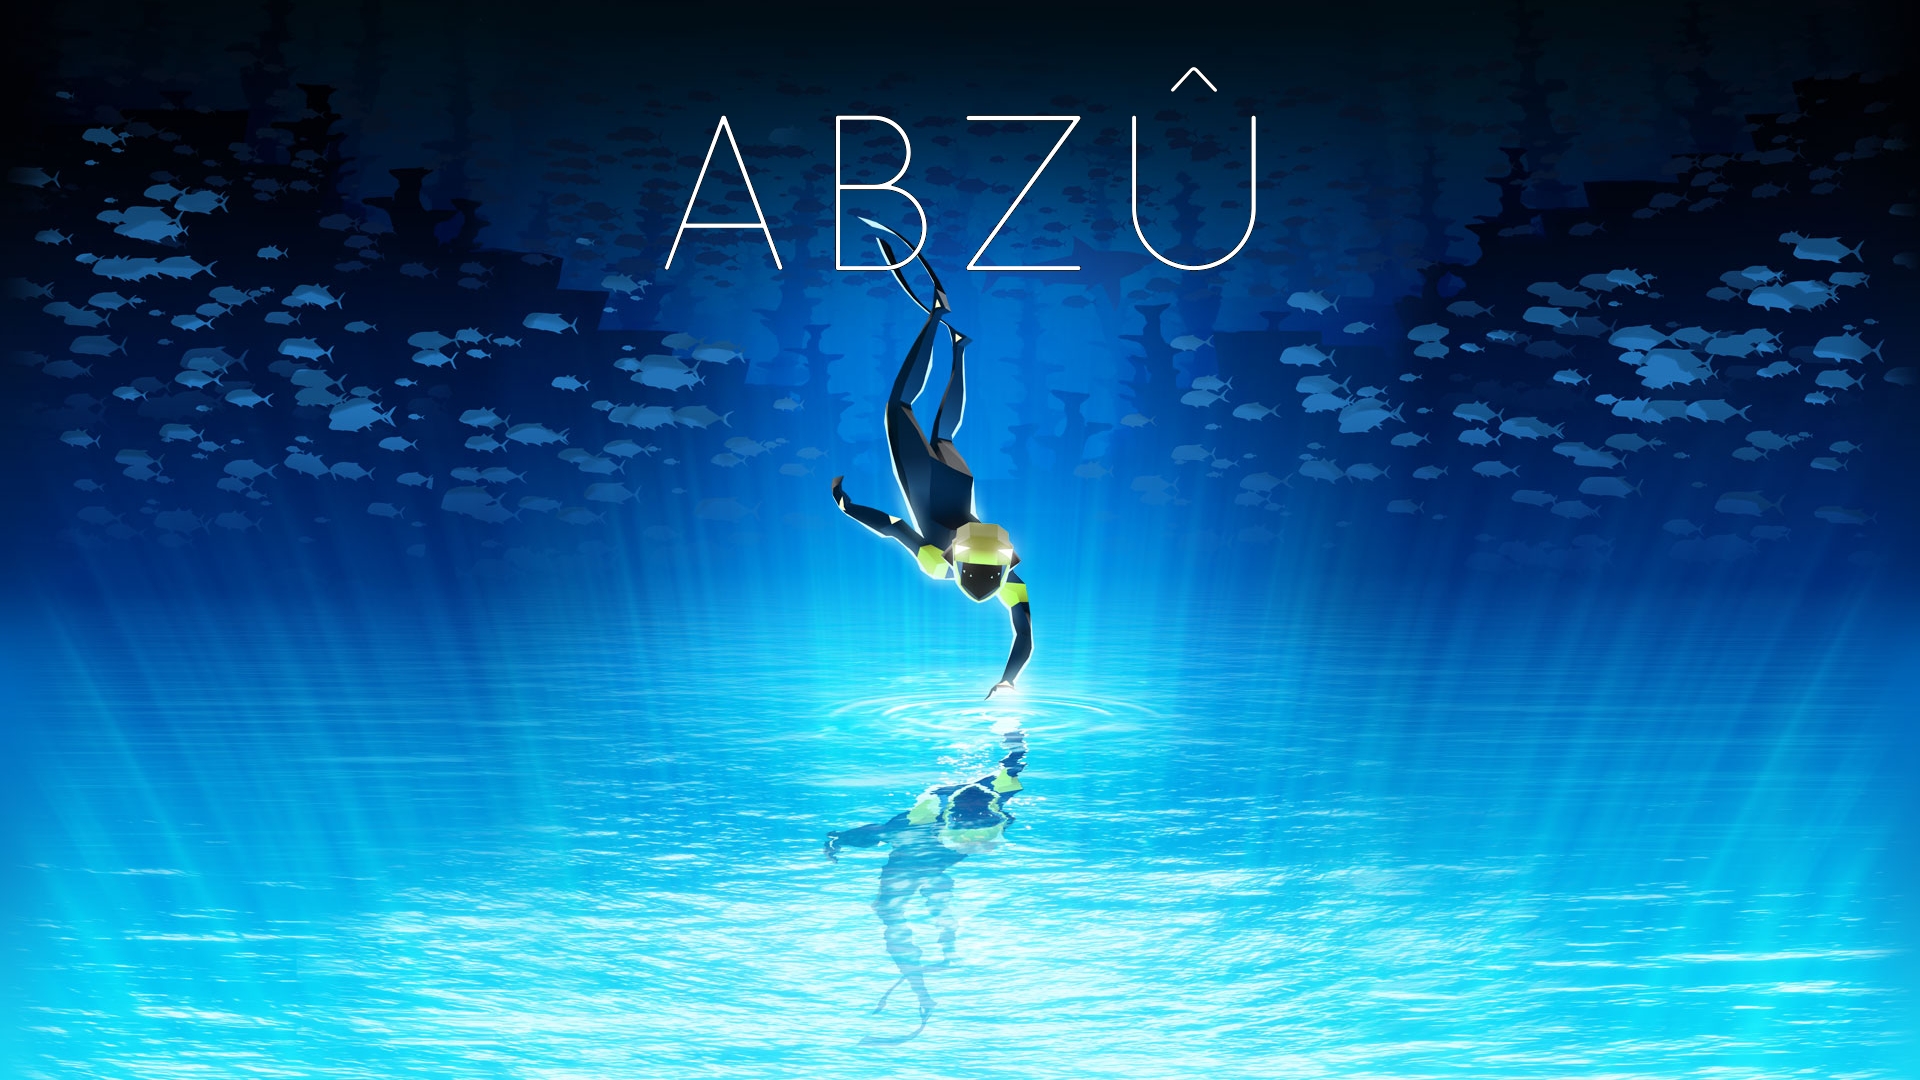 abzu-pc-spiel-steam-cover.jpg